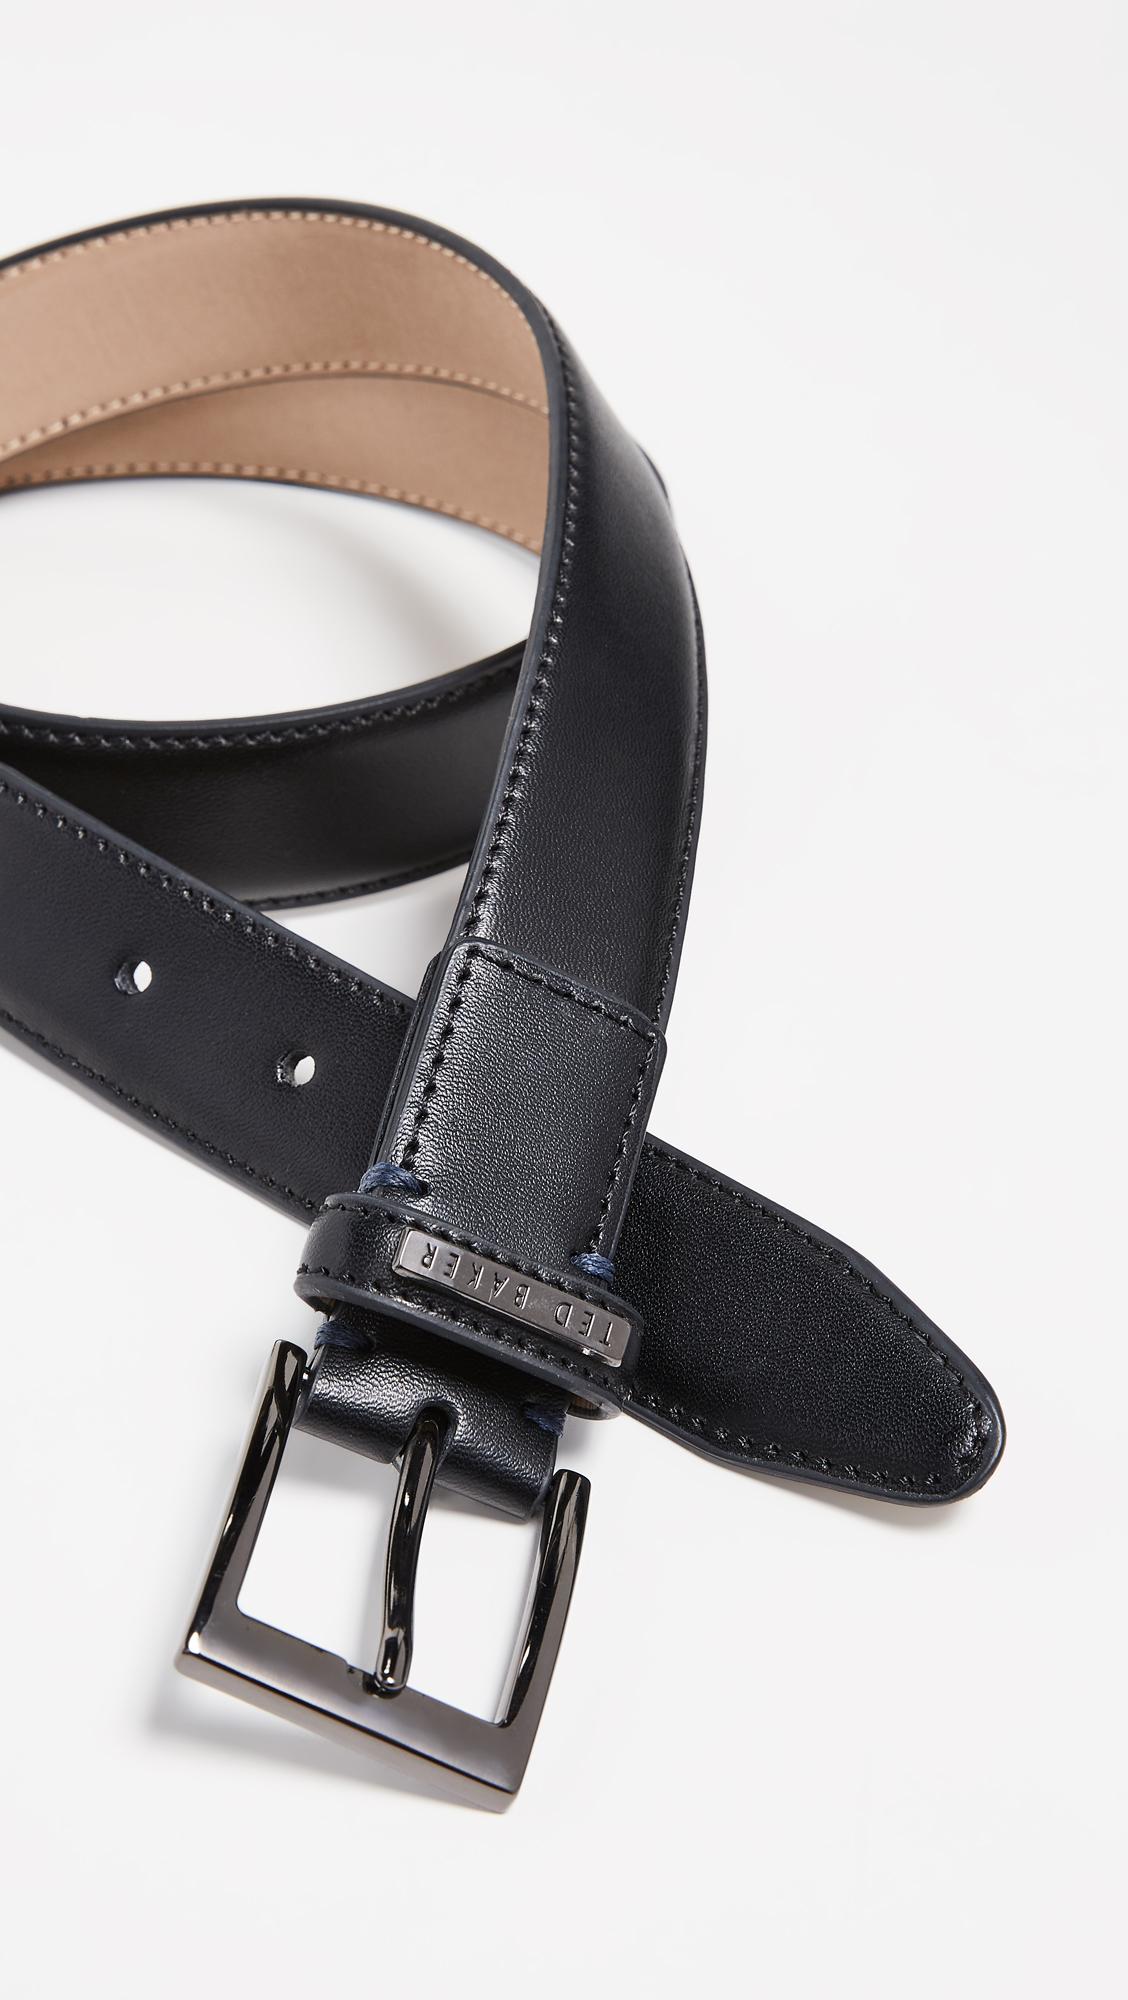 Ted Baker Leather Keeper Plate Belt in Black for Men - Lyst